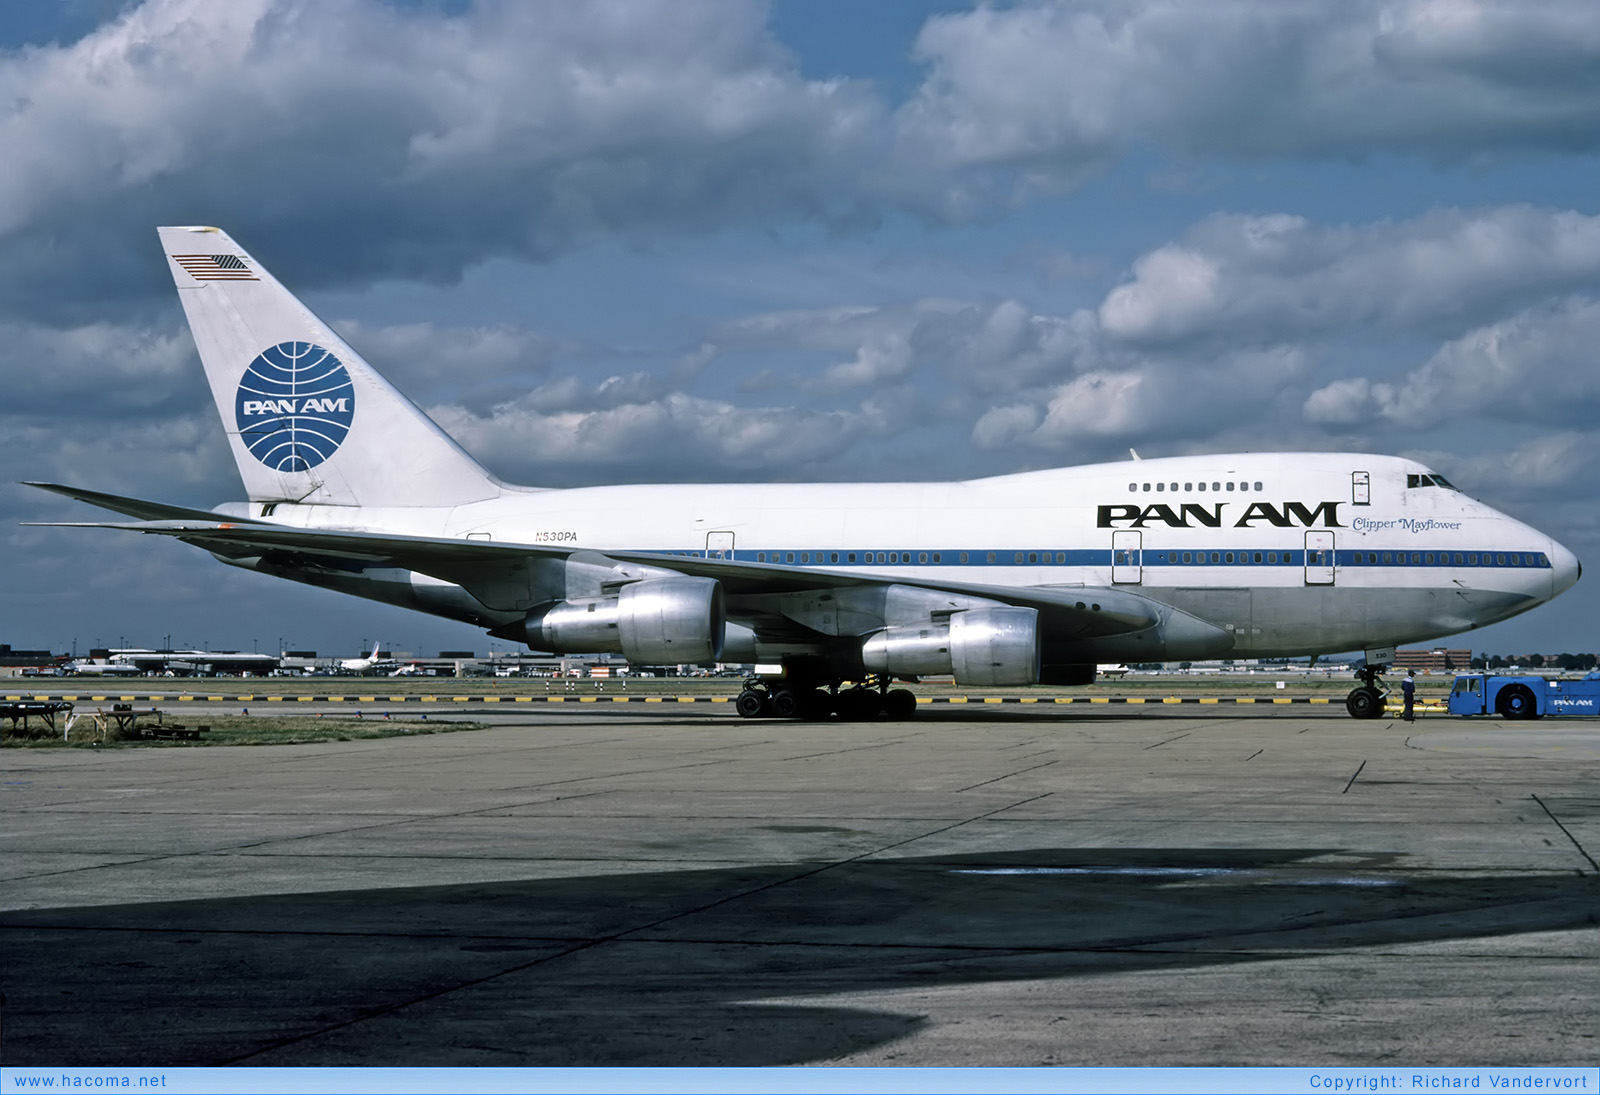 Photo of N530PA - Pan Am Clipper Mayflower - London Heathrow Airport - Sep 1983